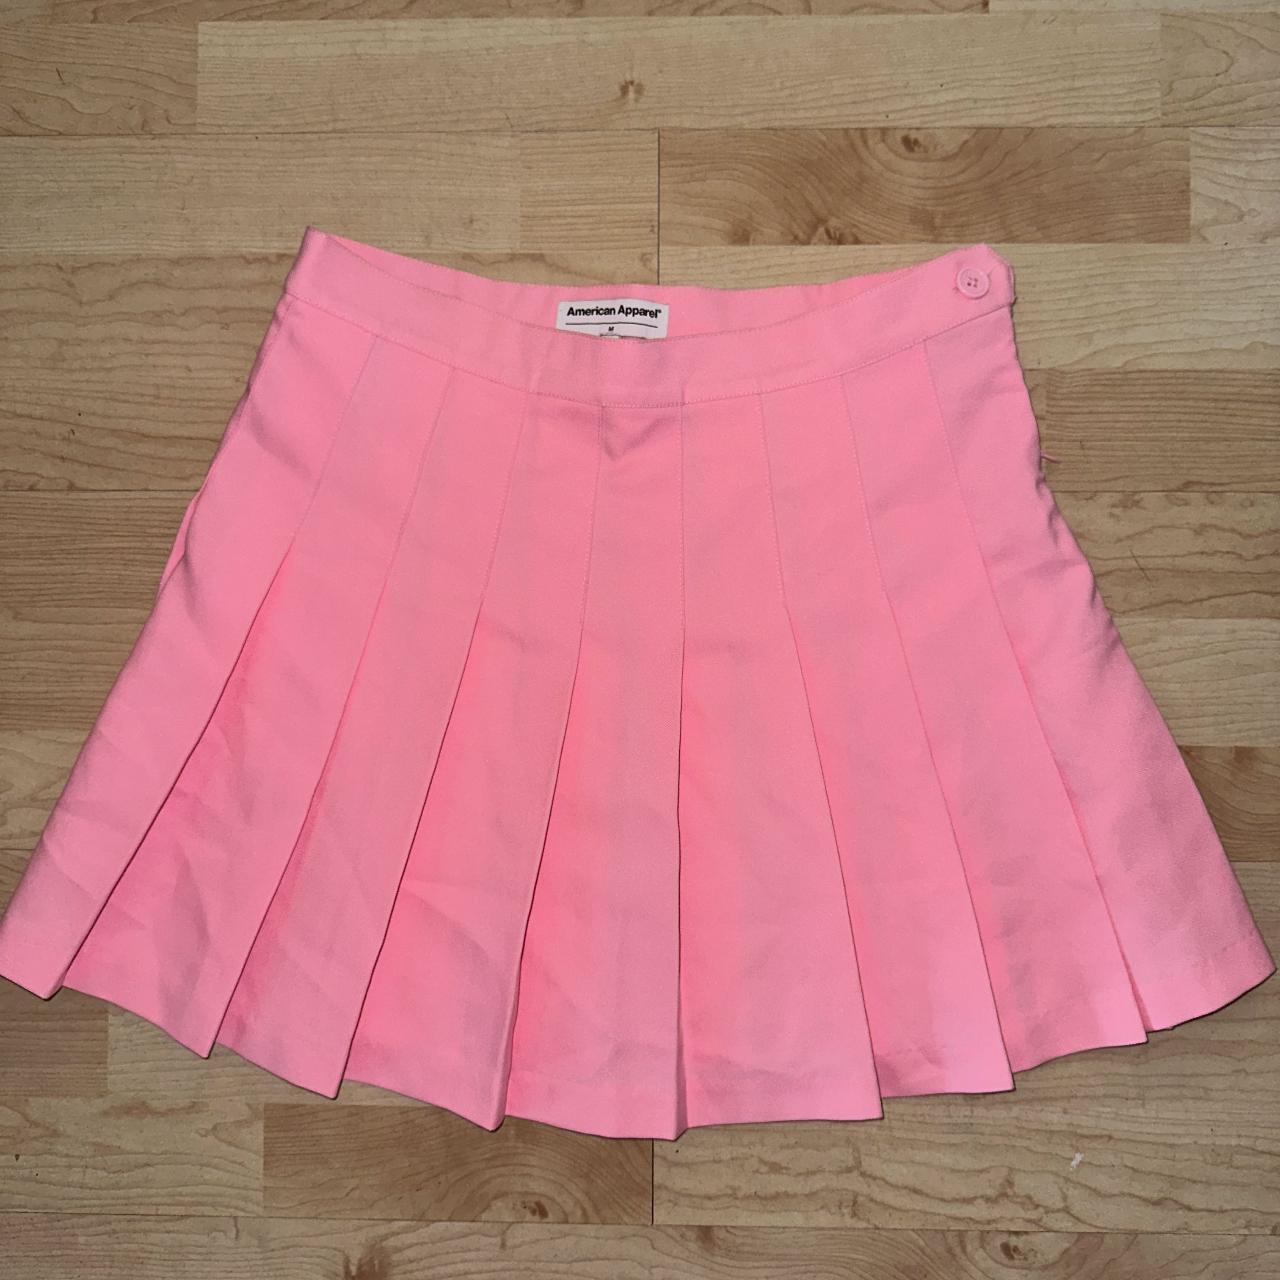 AMERICAN APPAREL babydoll pink tennis skirt size M.... - Depop